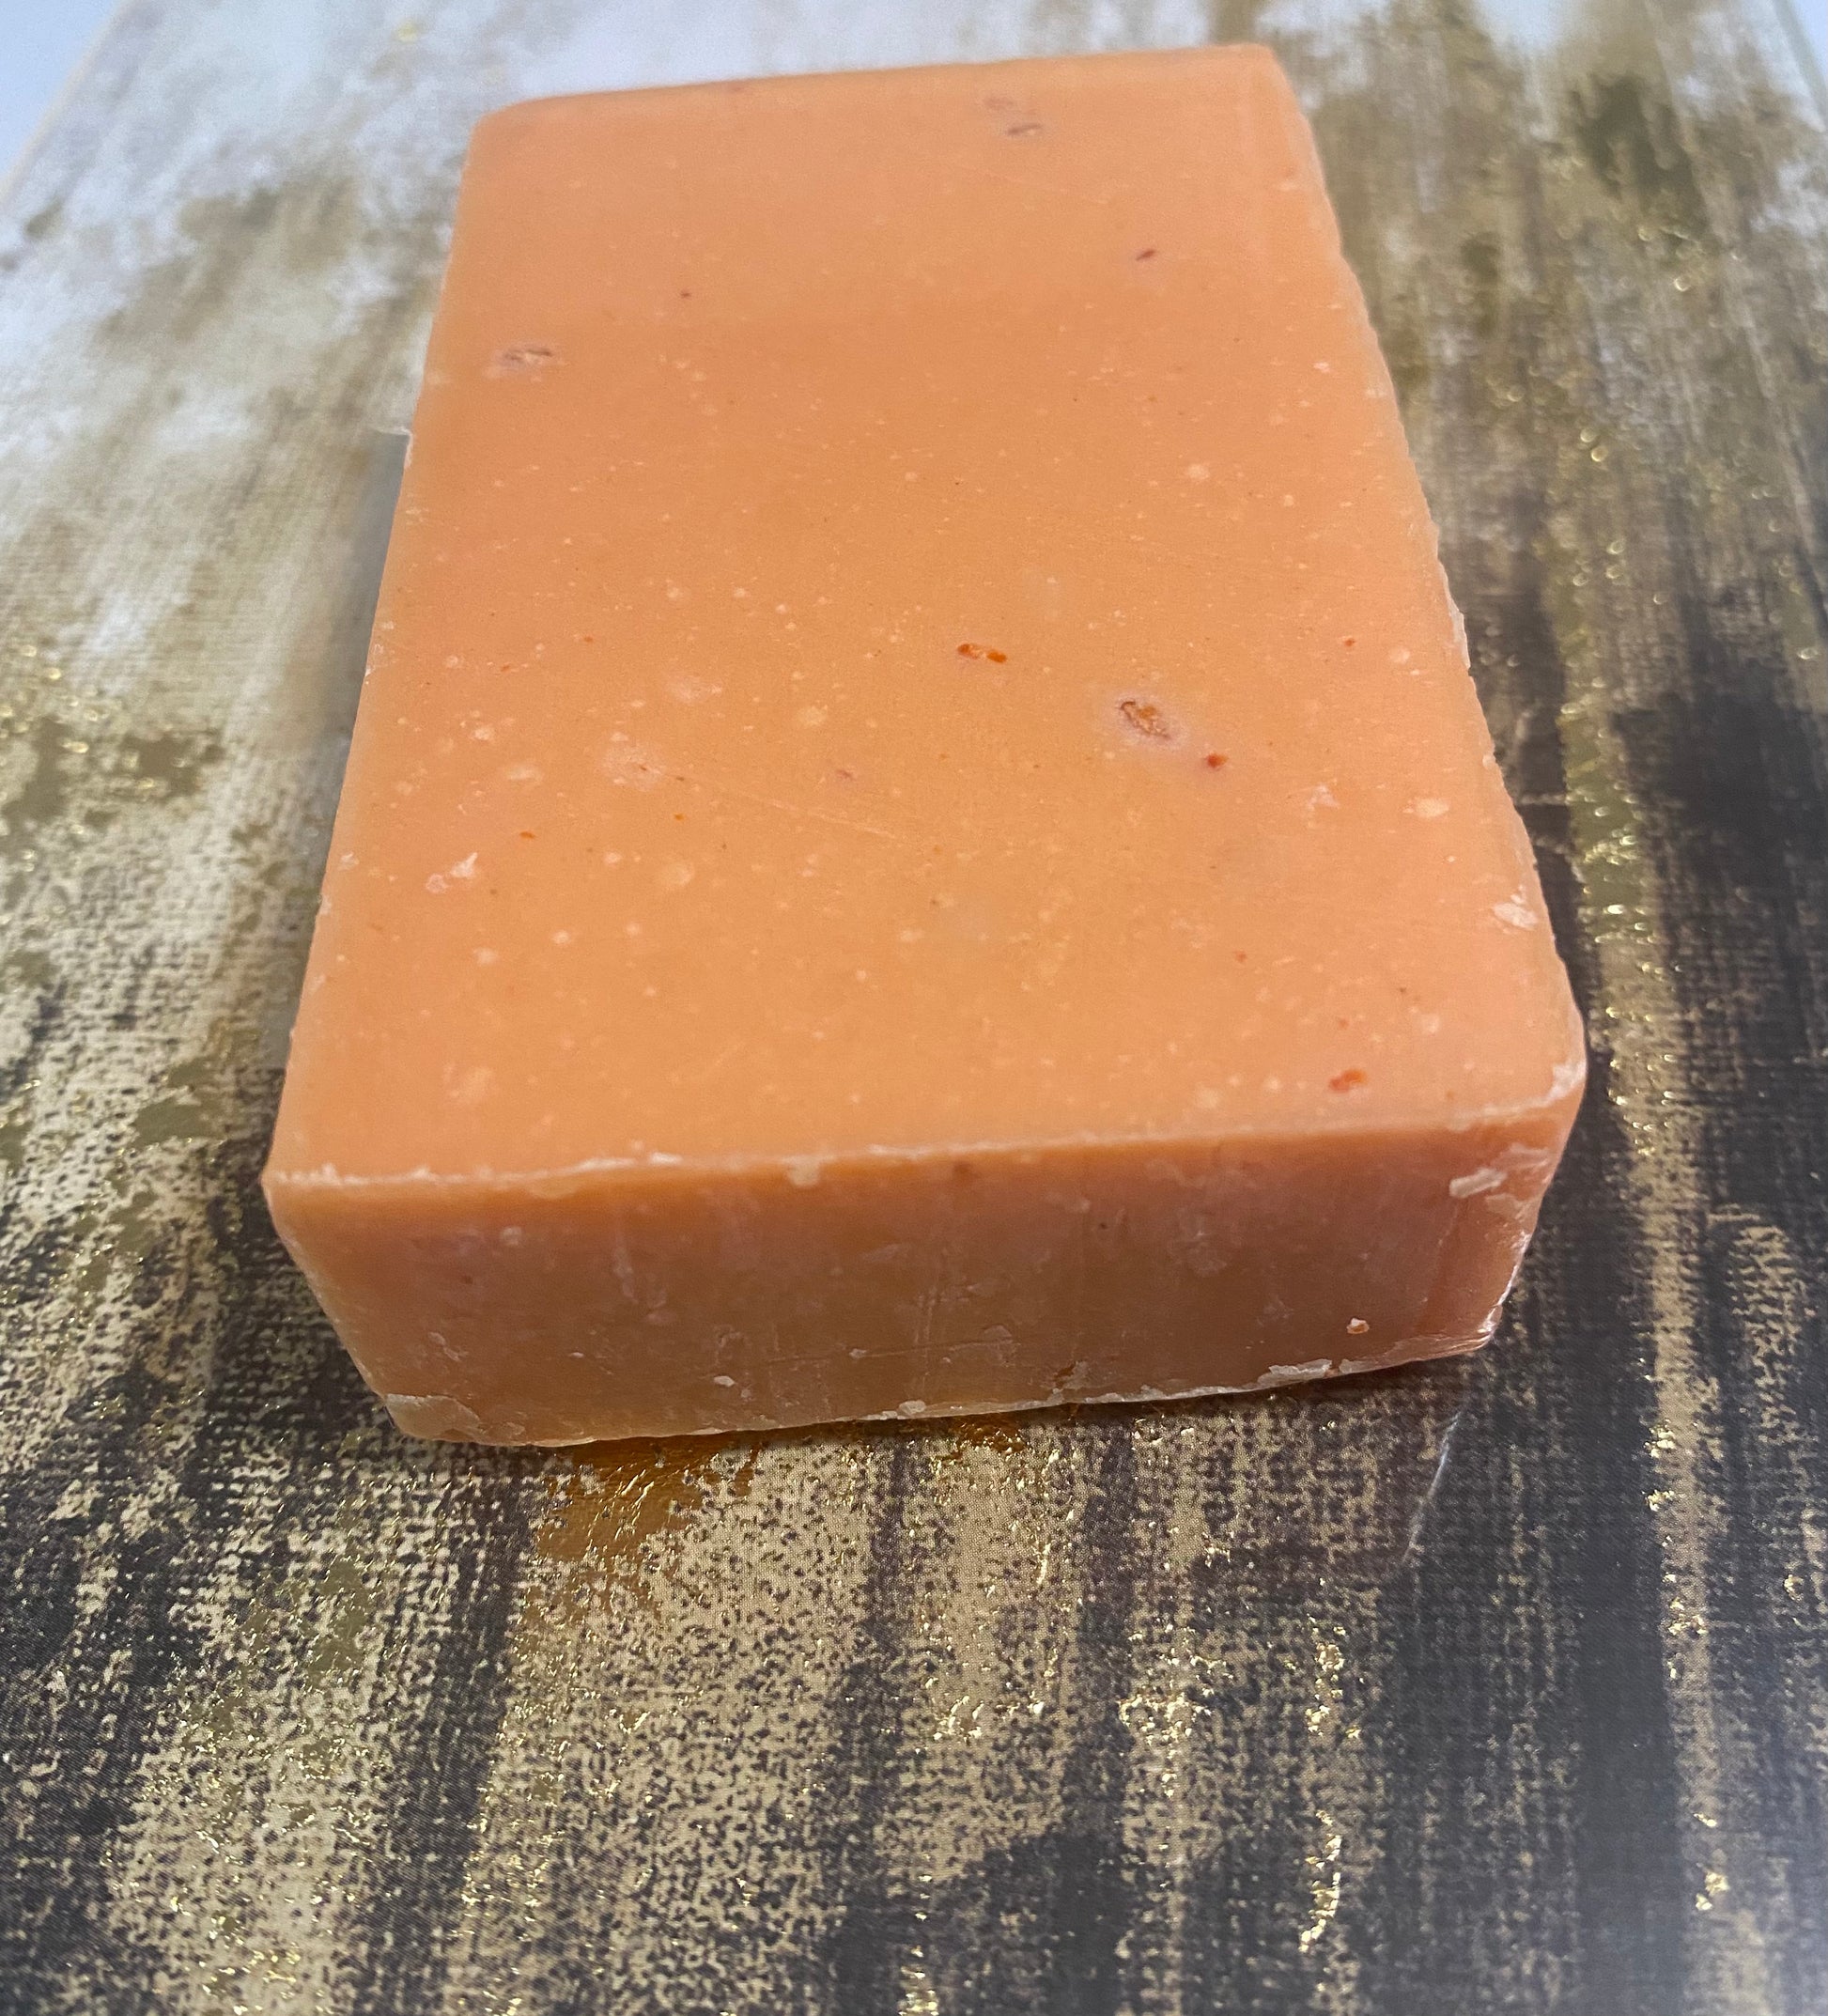 Honey Orange Soap